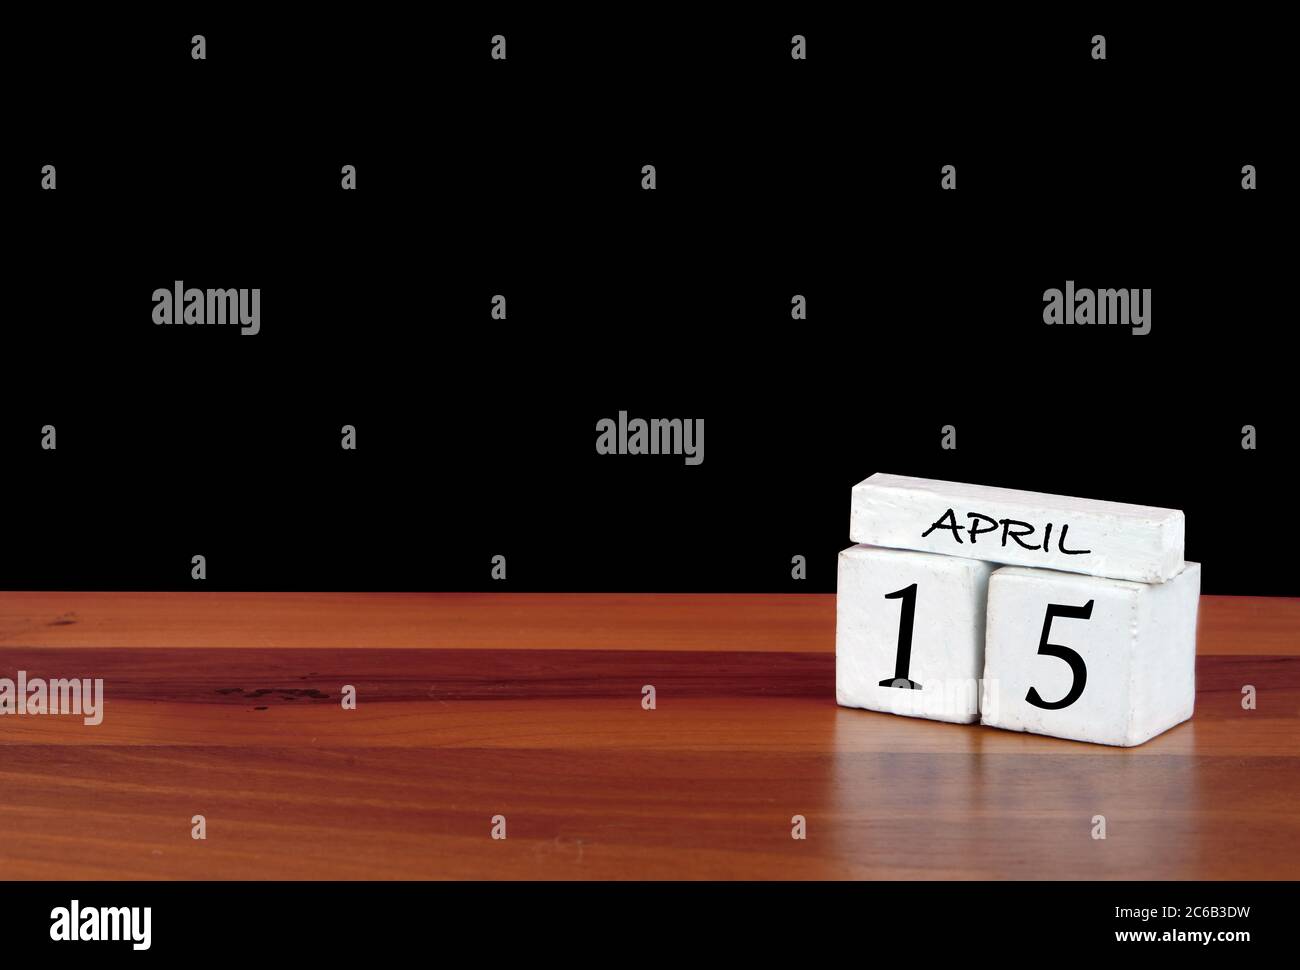 15 Abril calendario mes. 15 días del mes. Calendario reflejado en suelo de madera con fondo negro Foto de stock